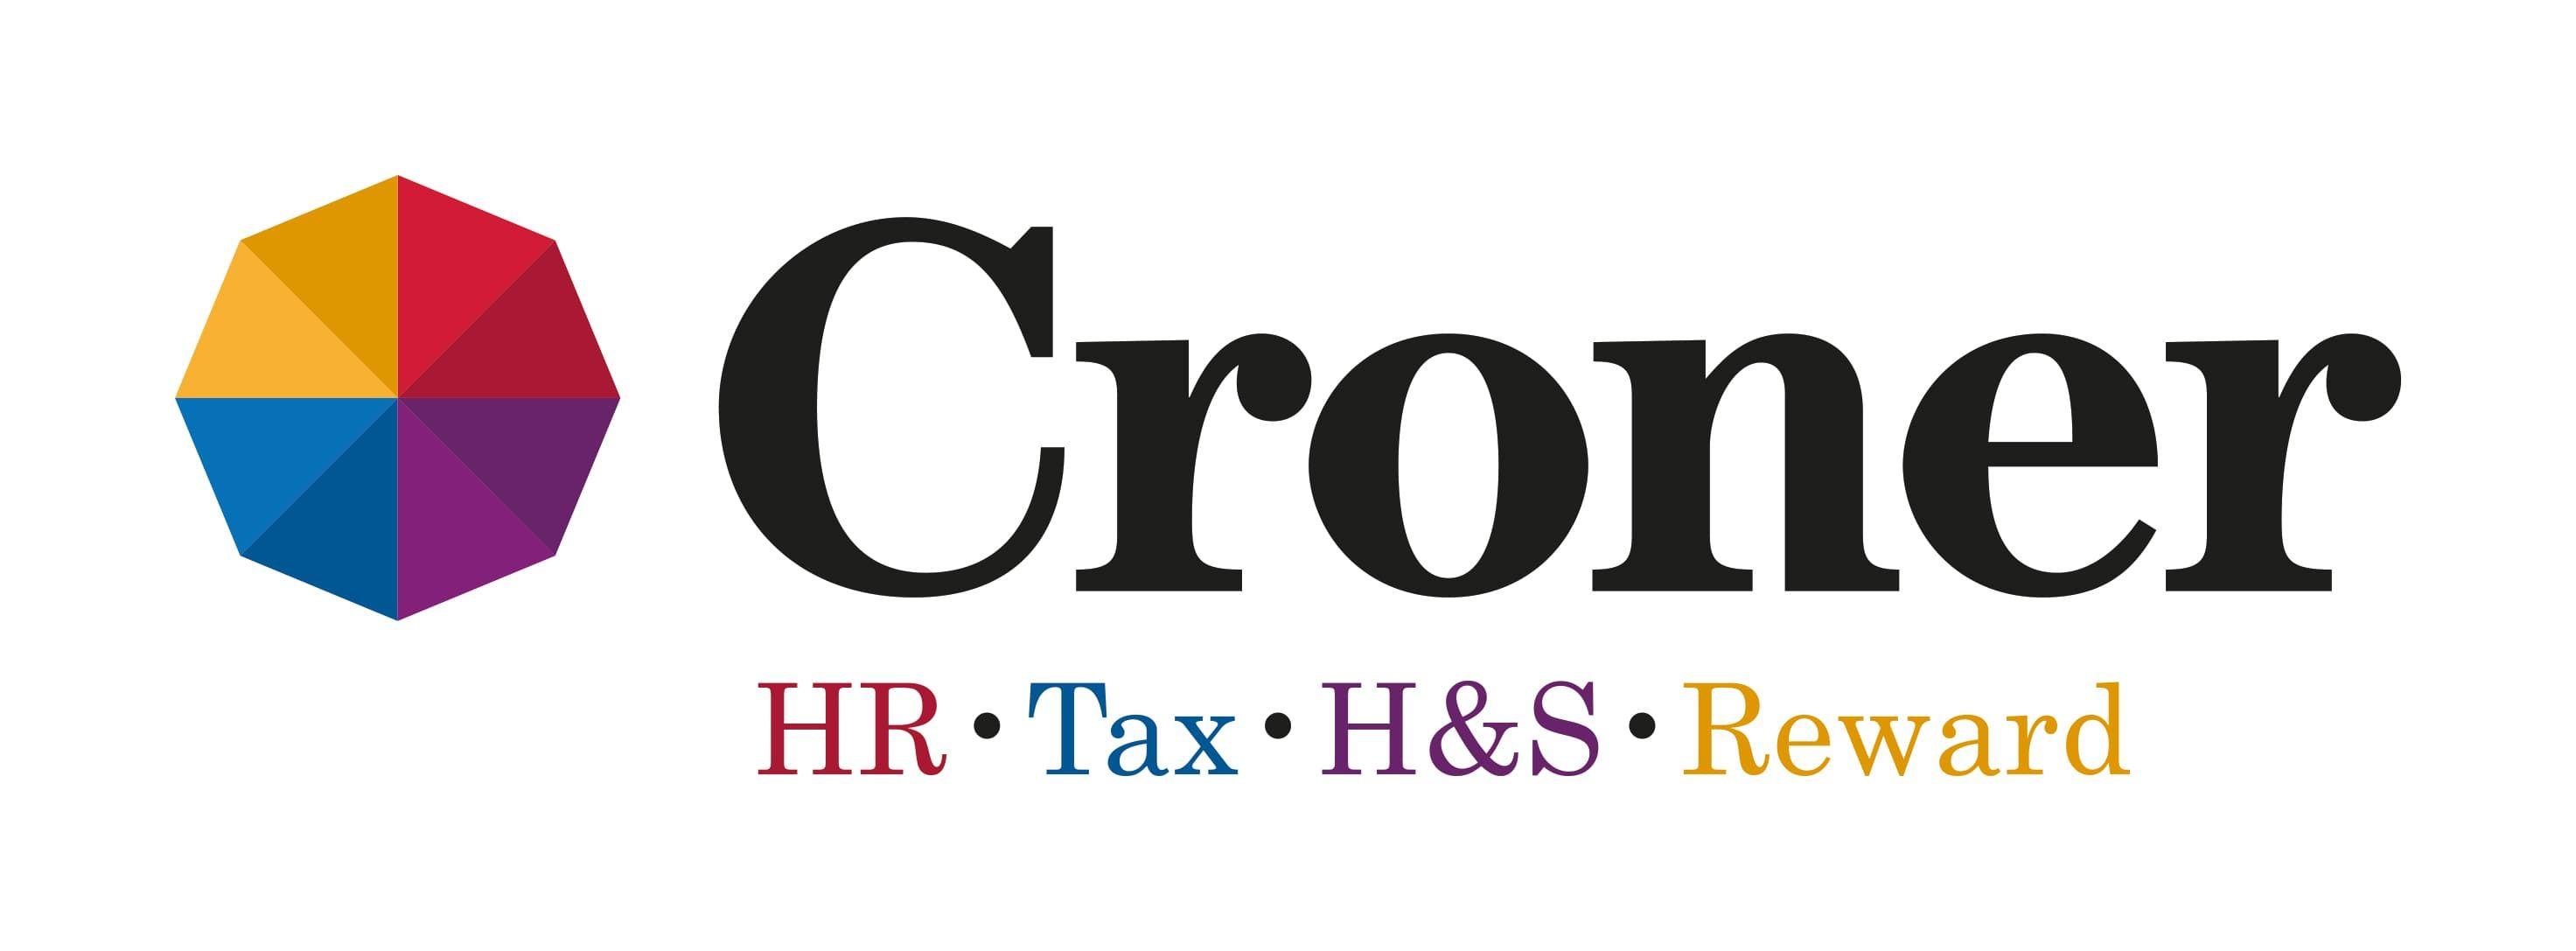 Google Main Logo - Croner Logo & Guidance | Croner Group